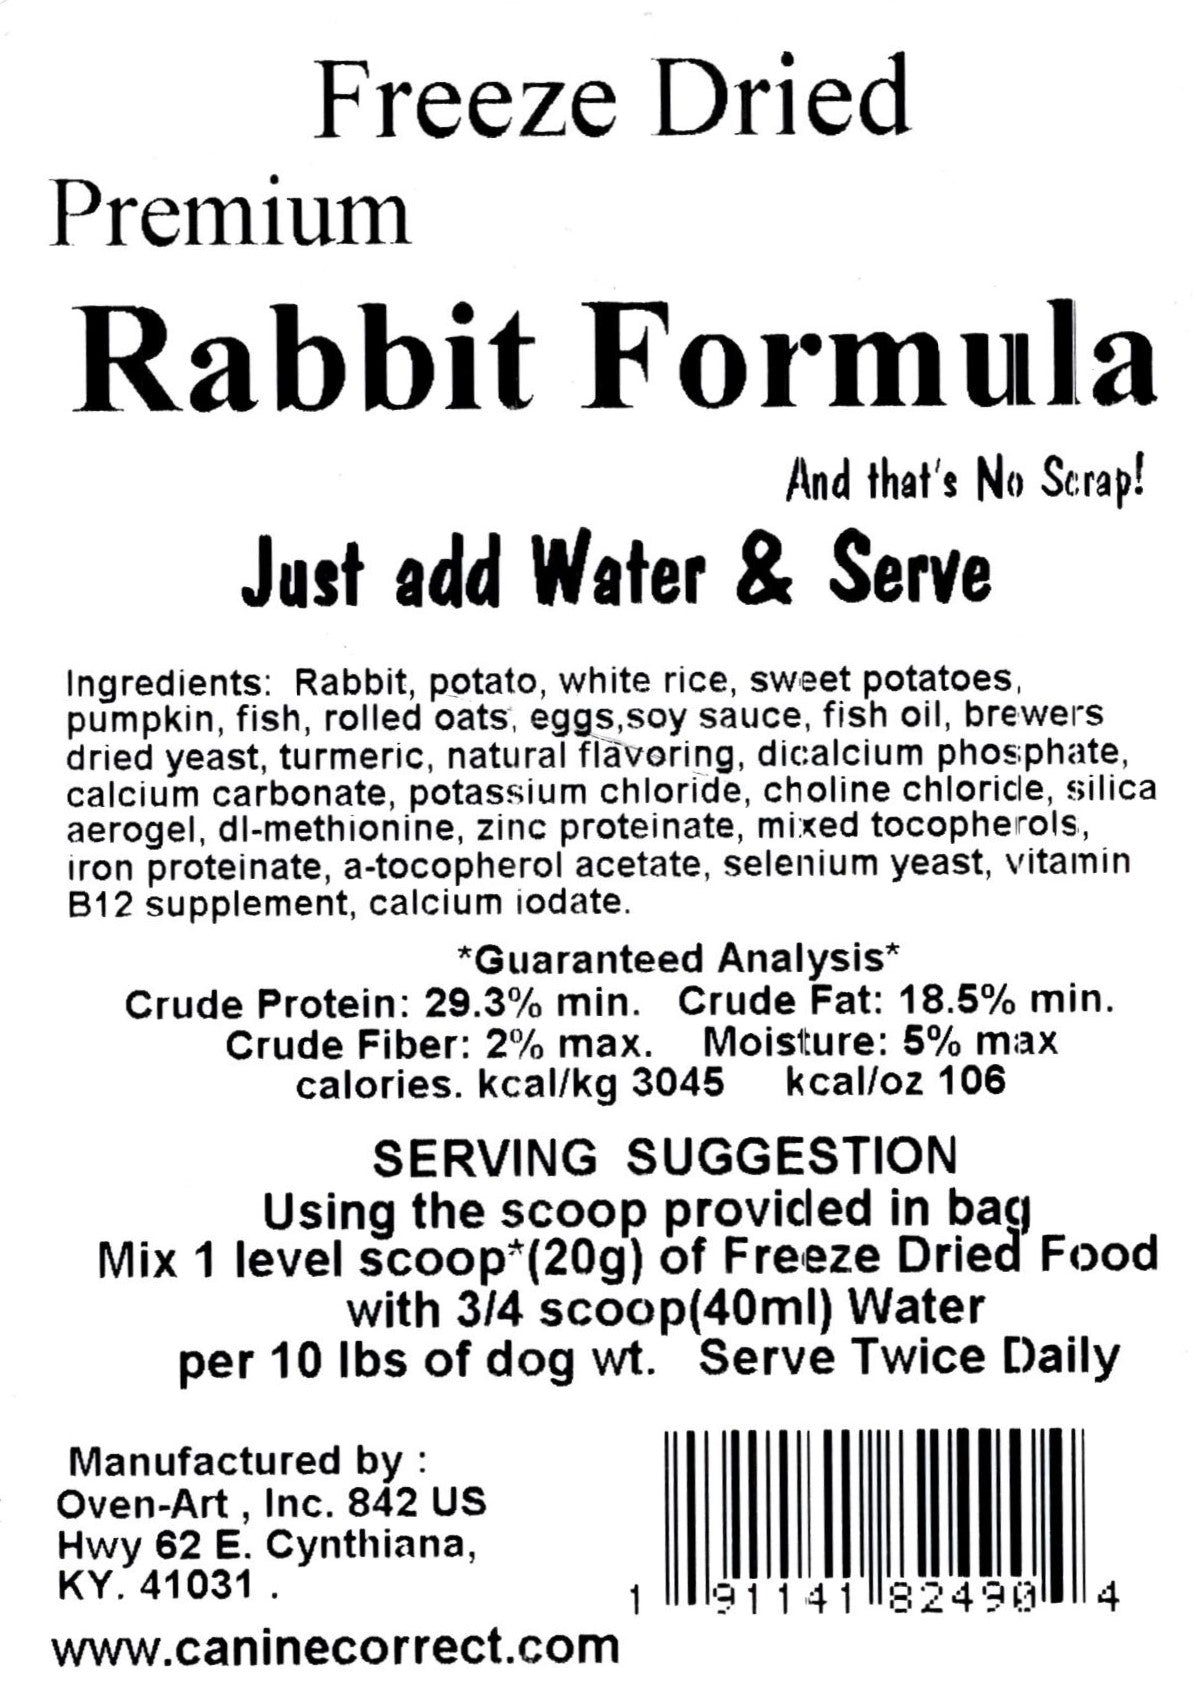 Canine Correct Premium Rabbit Formula